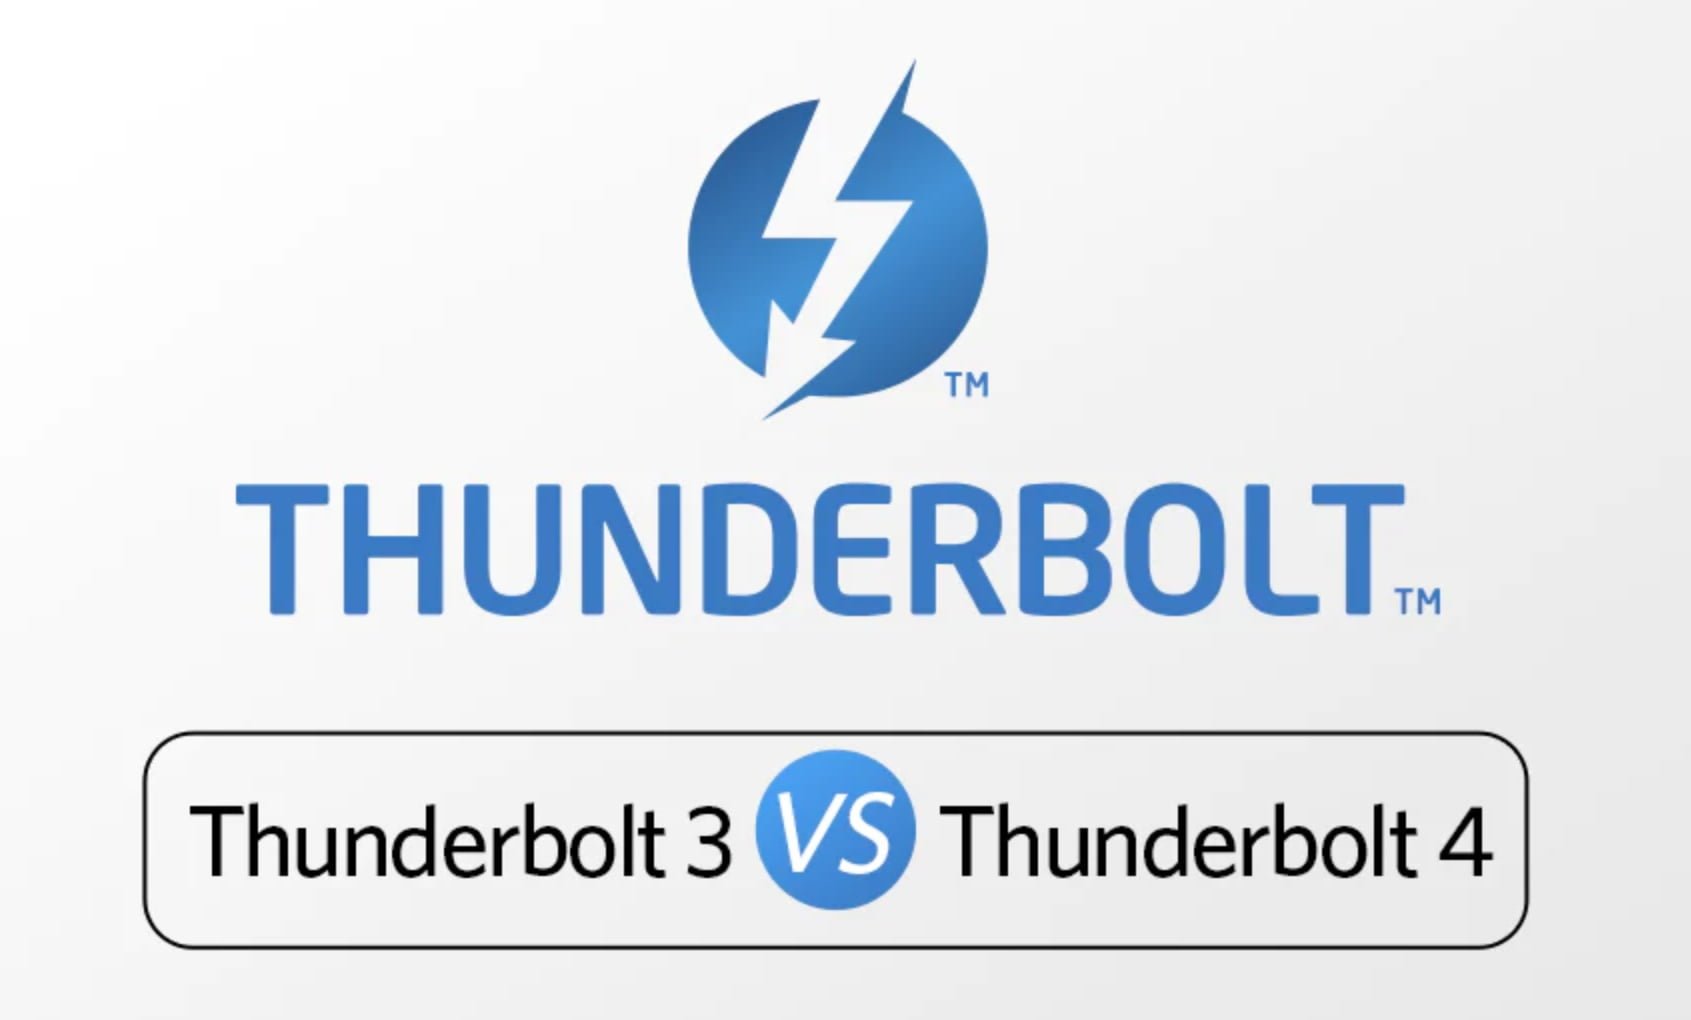 So sánh giữa thunderbolt 4 và thunderbolt 3